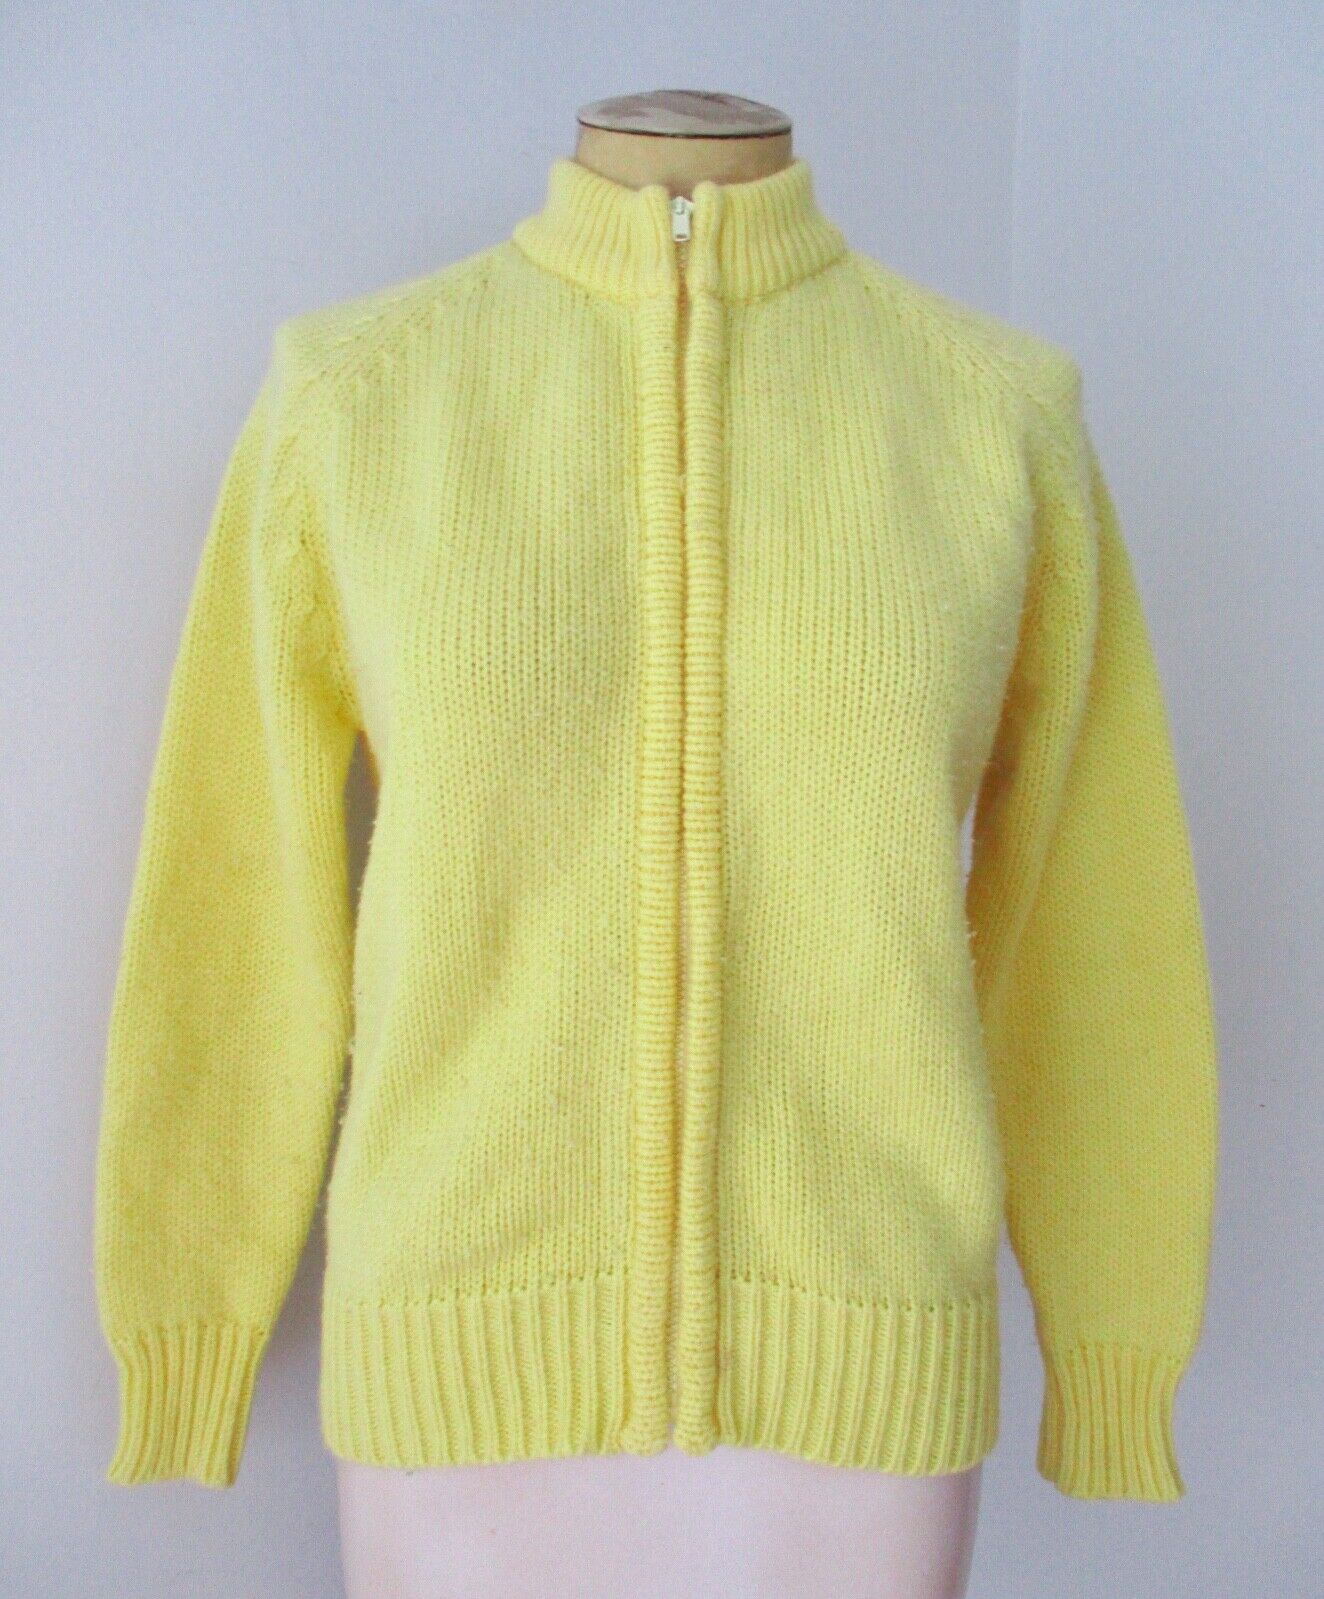 Vtg 70s bright lemon yellow acrylic zip front cardigan sweater mock t-neck  M/L